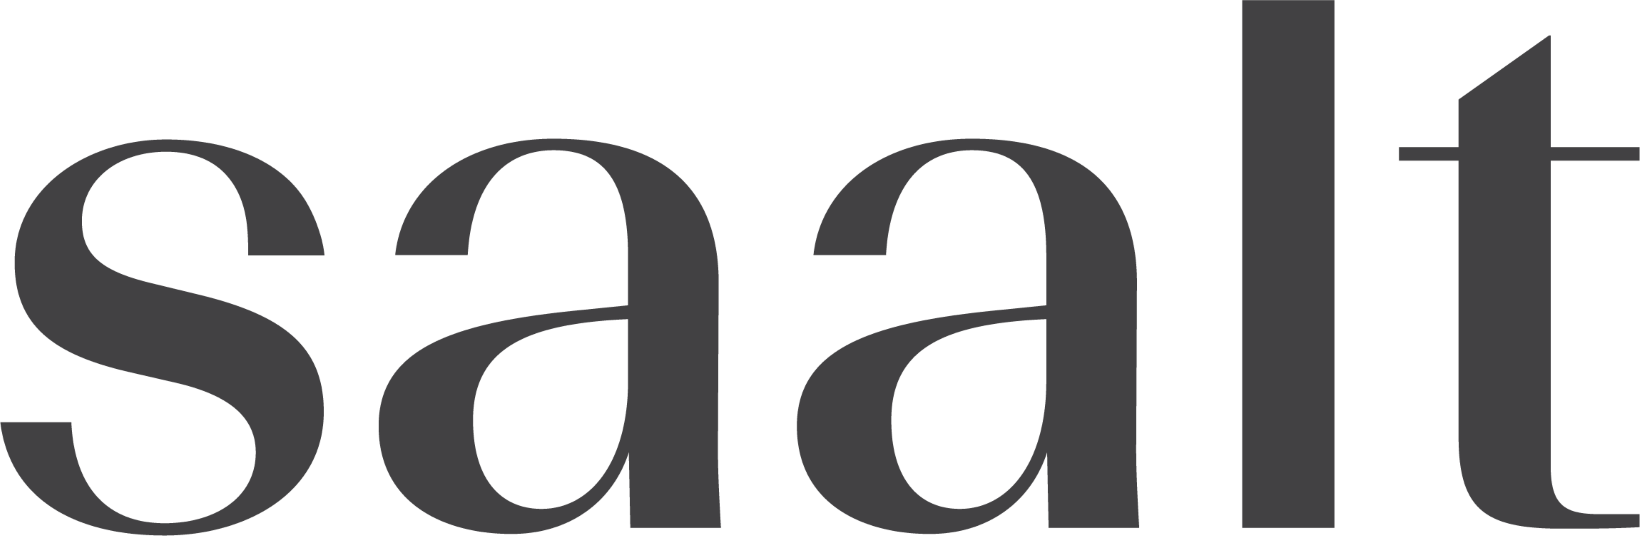 Saalt CA logo